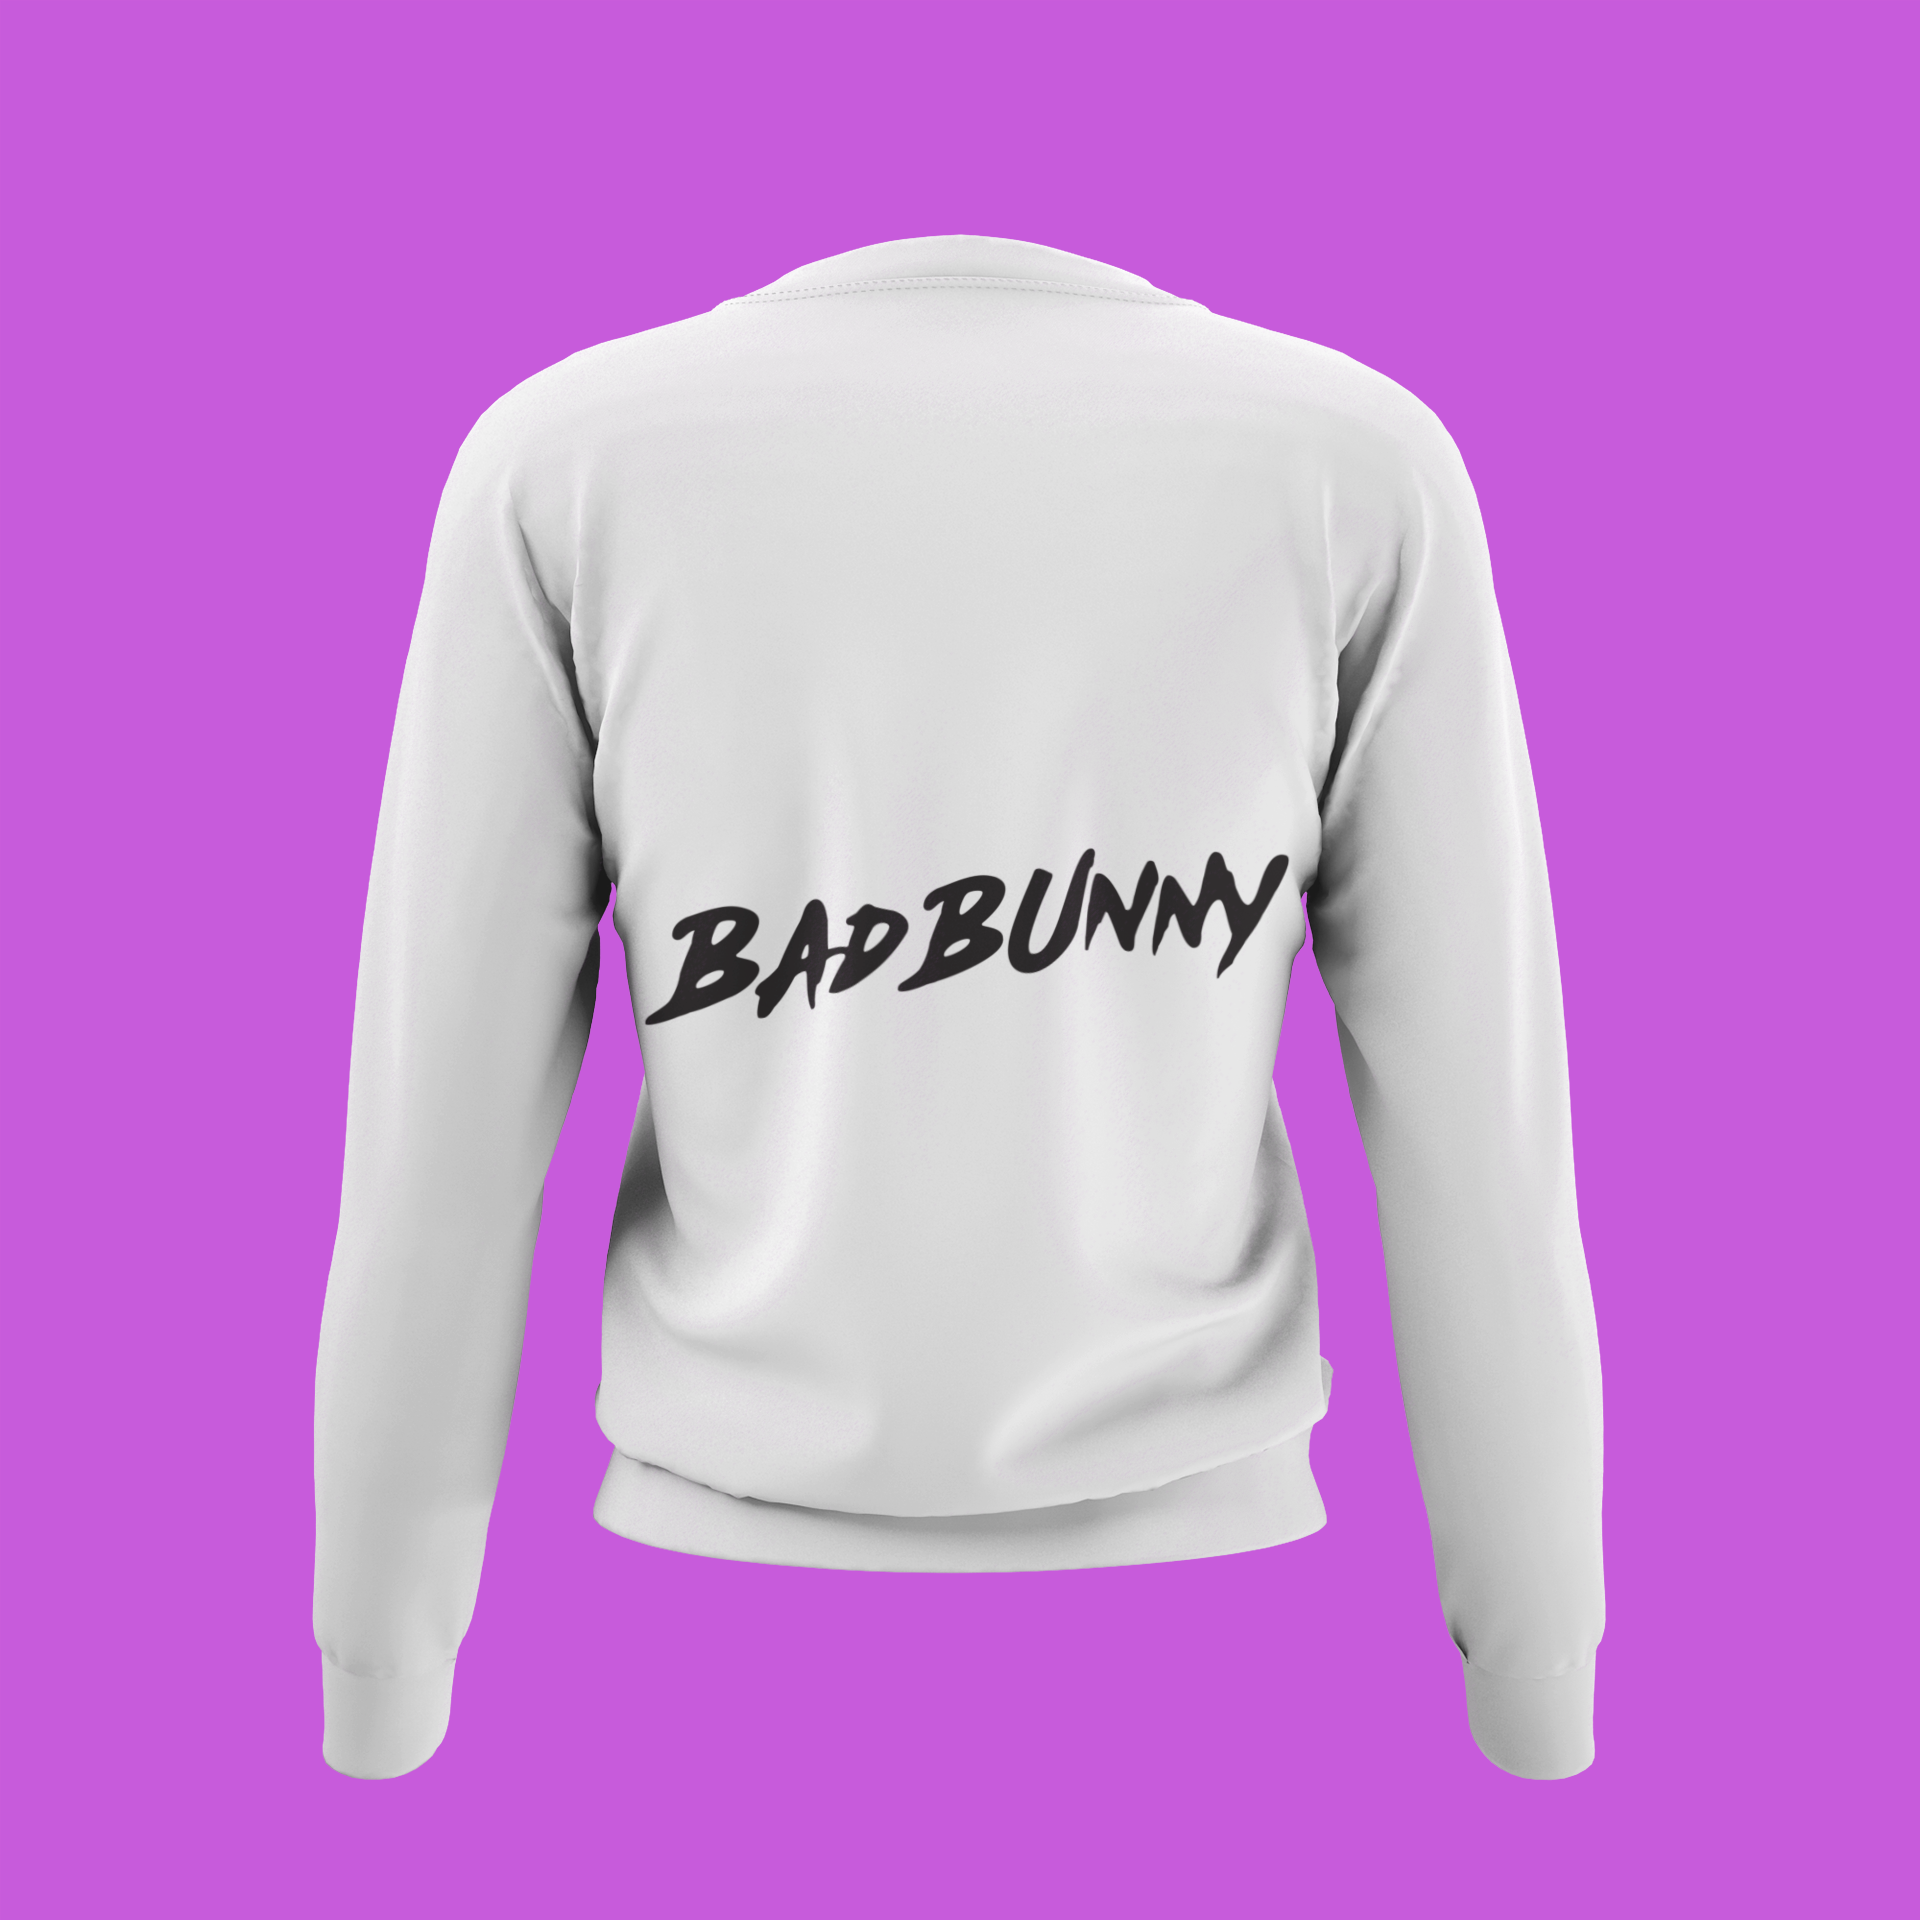 Bad Bunny Sweatshirt/Cup Set